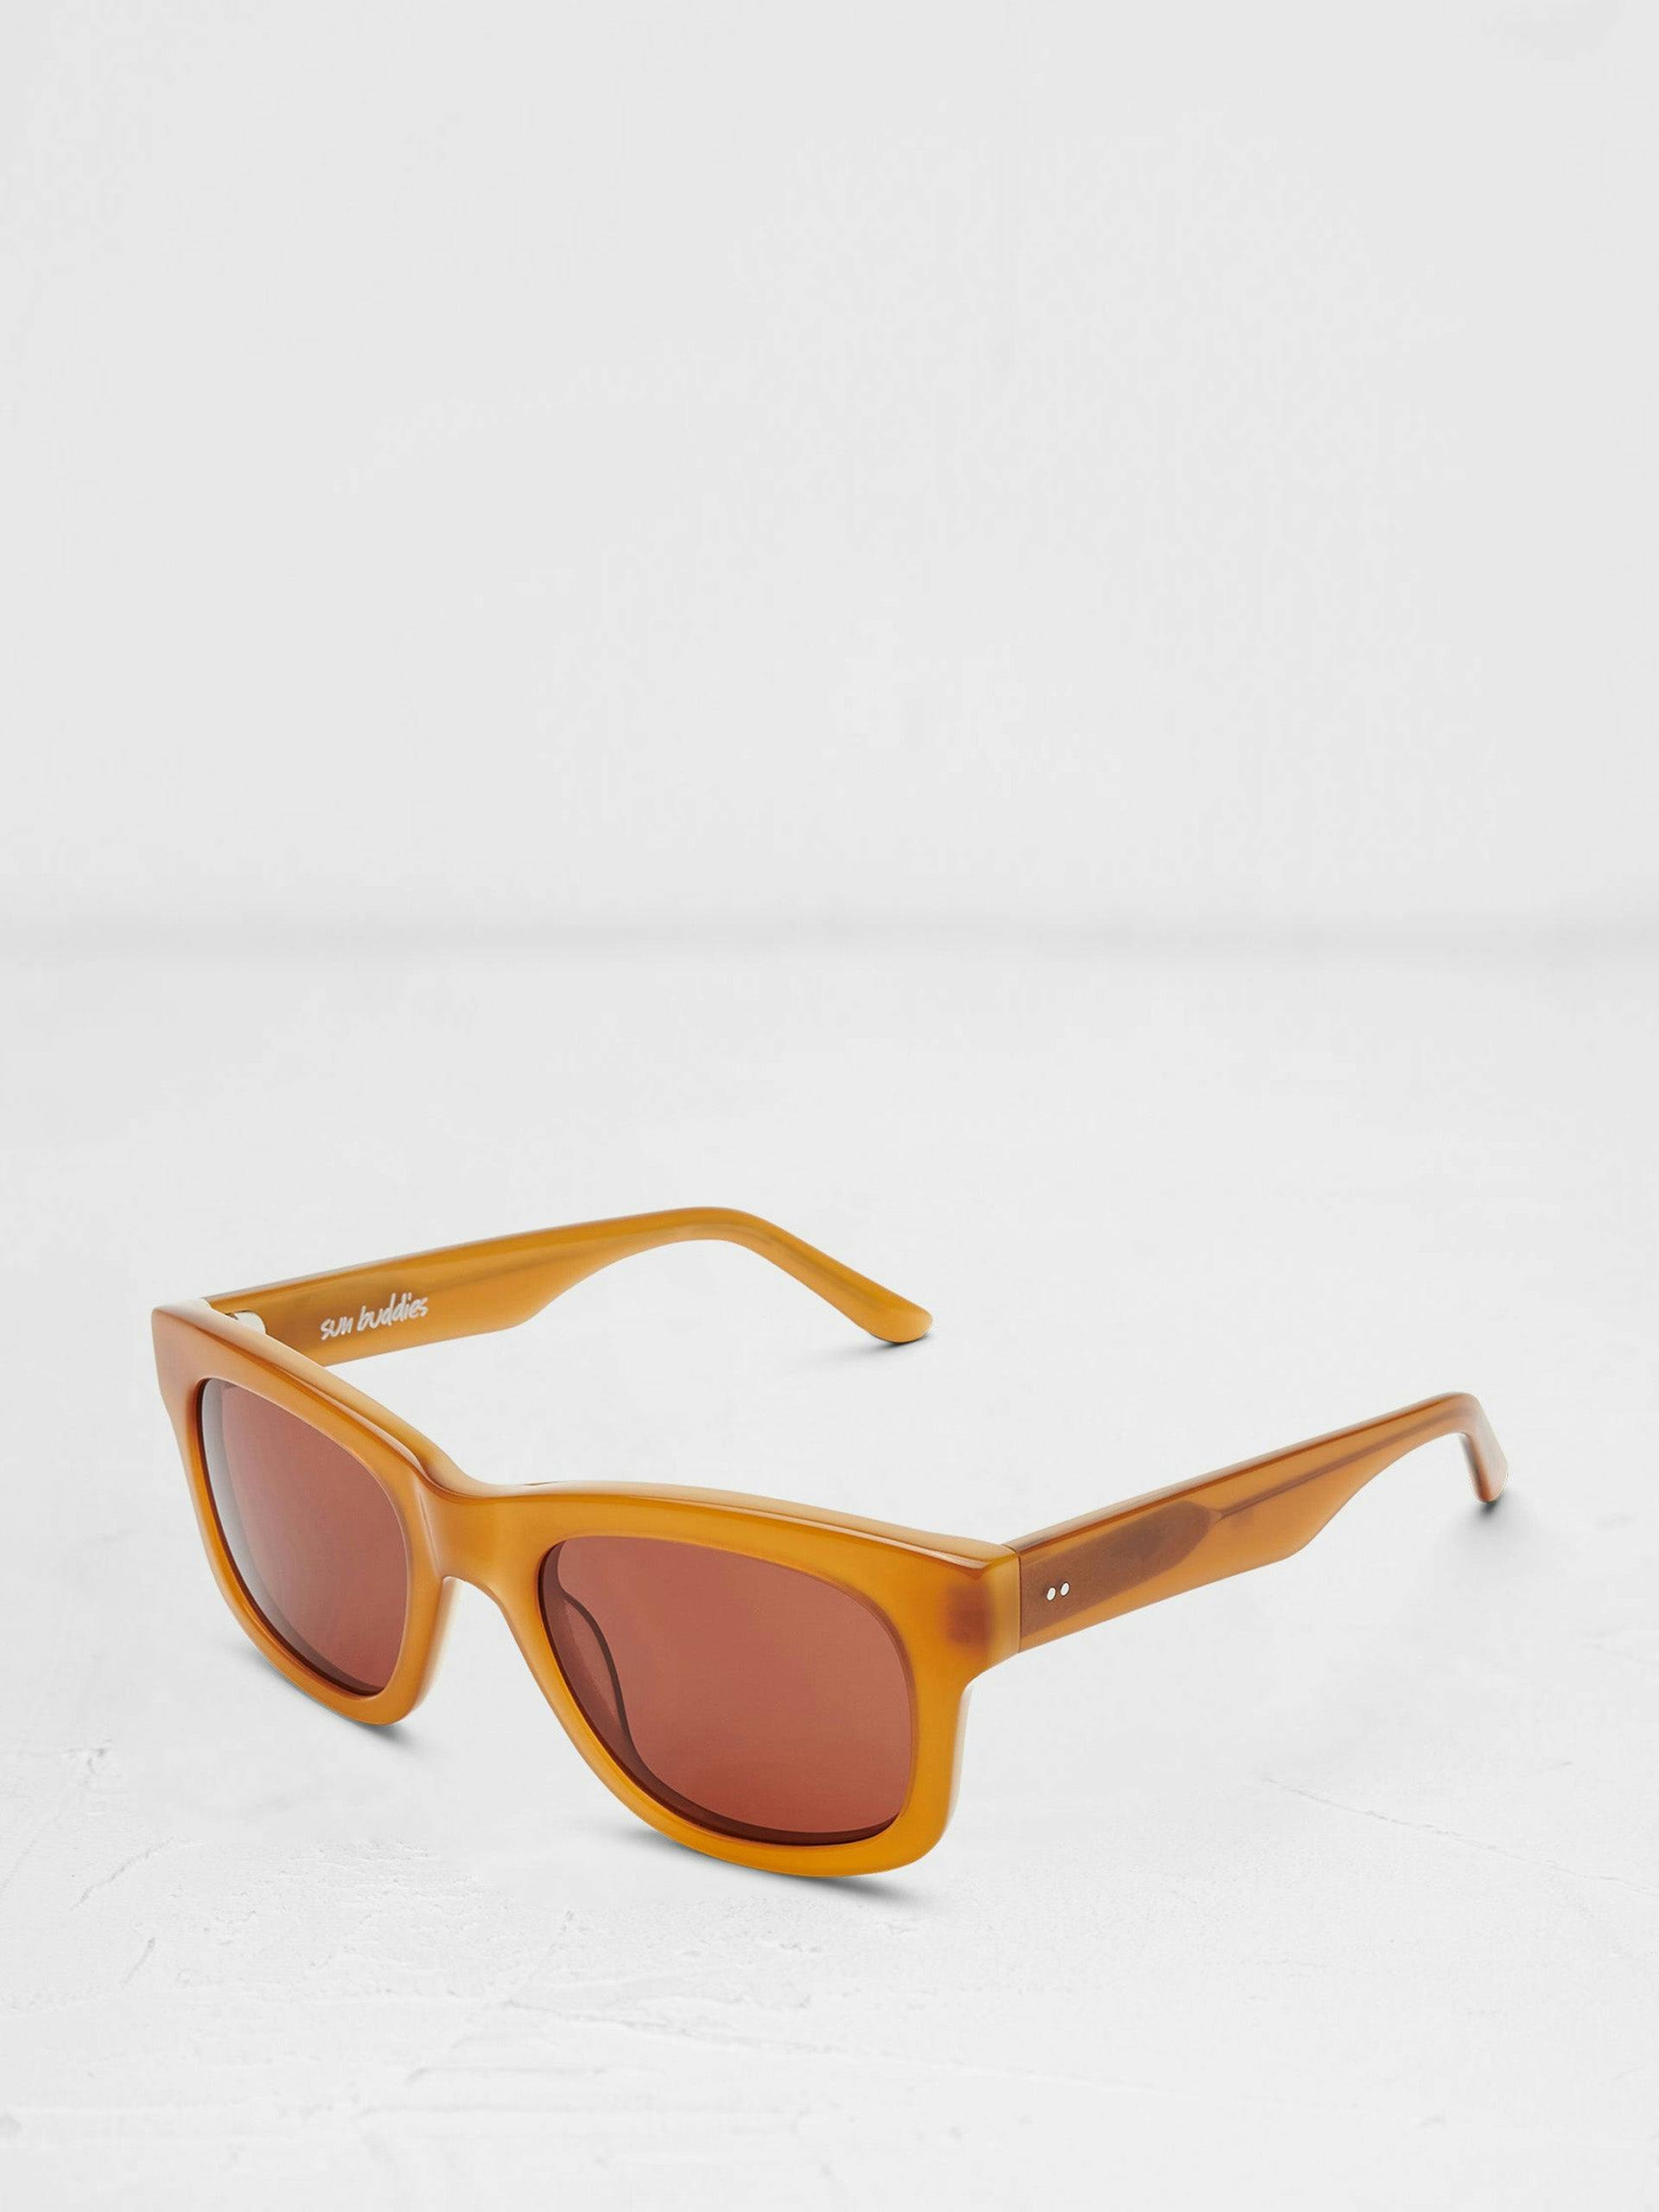 Harold sunglasses in Glow Orange